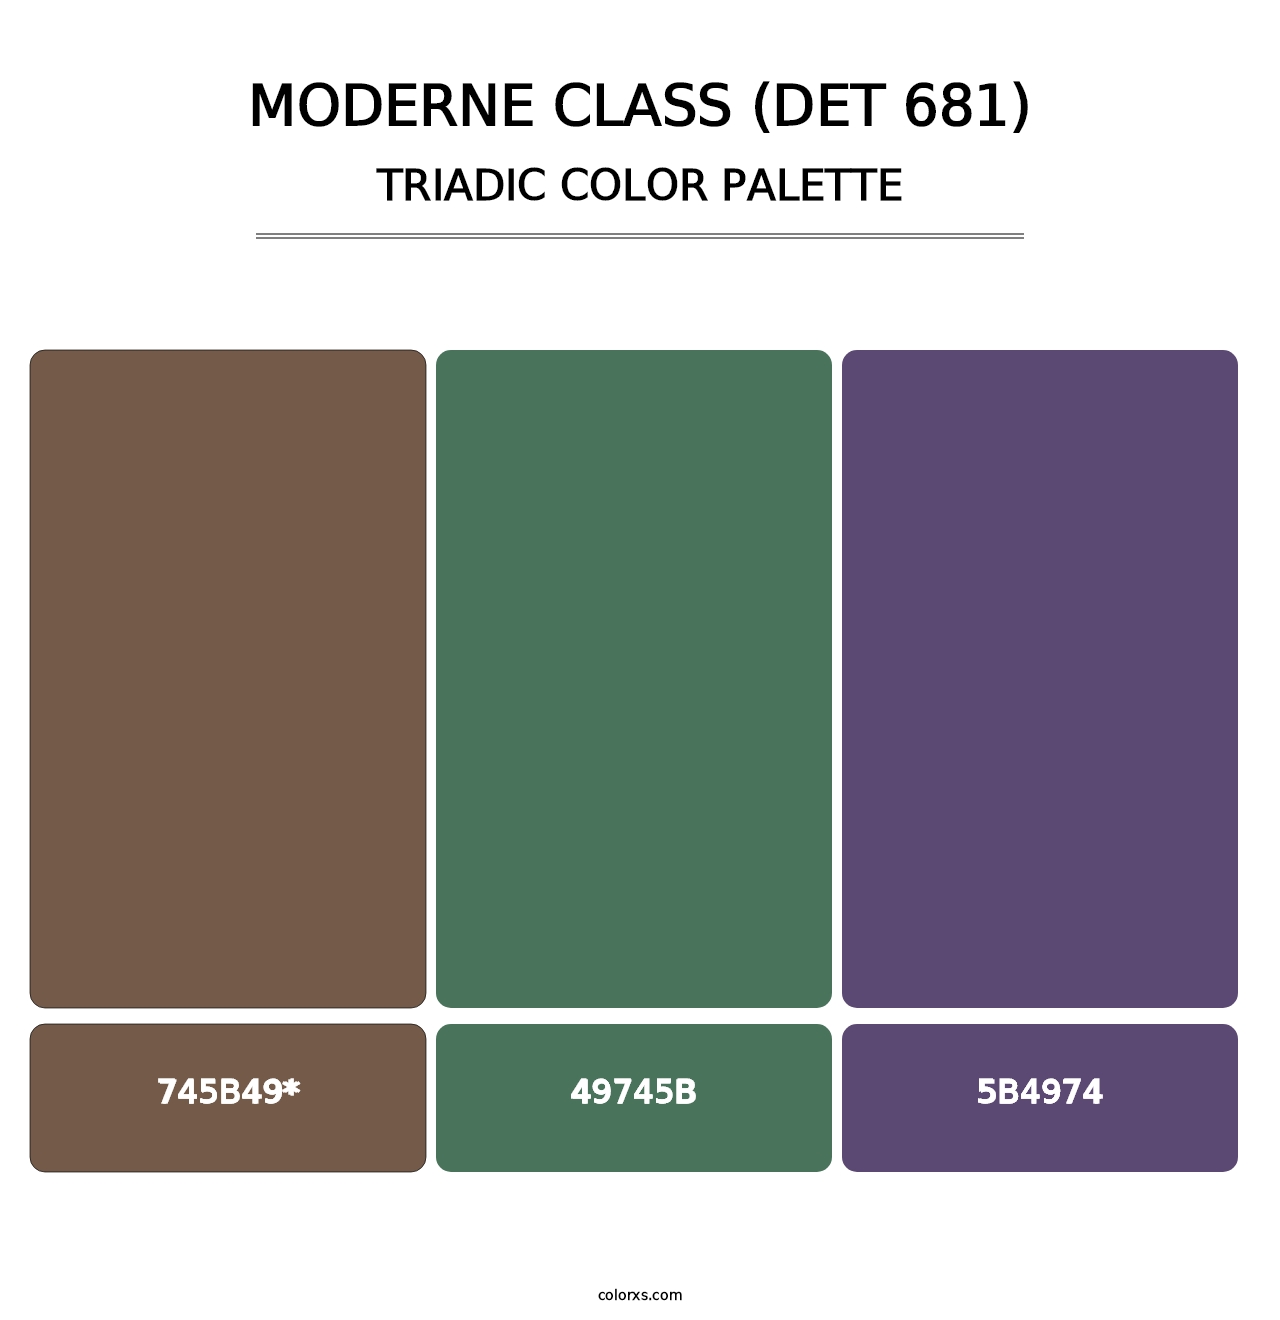 Moderne Class (DET 681) - Triadic Color Palette